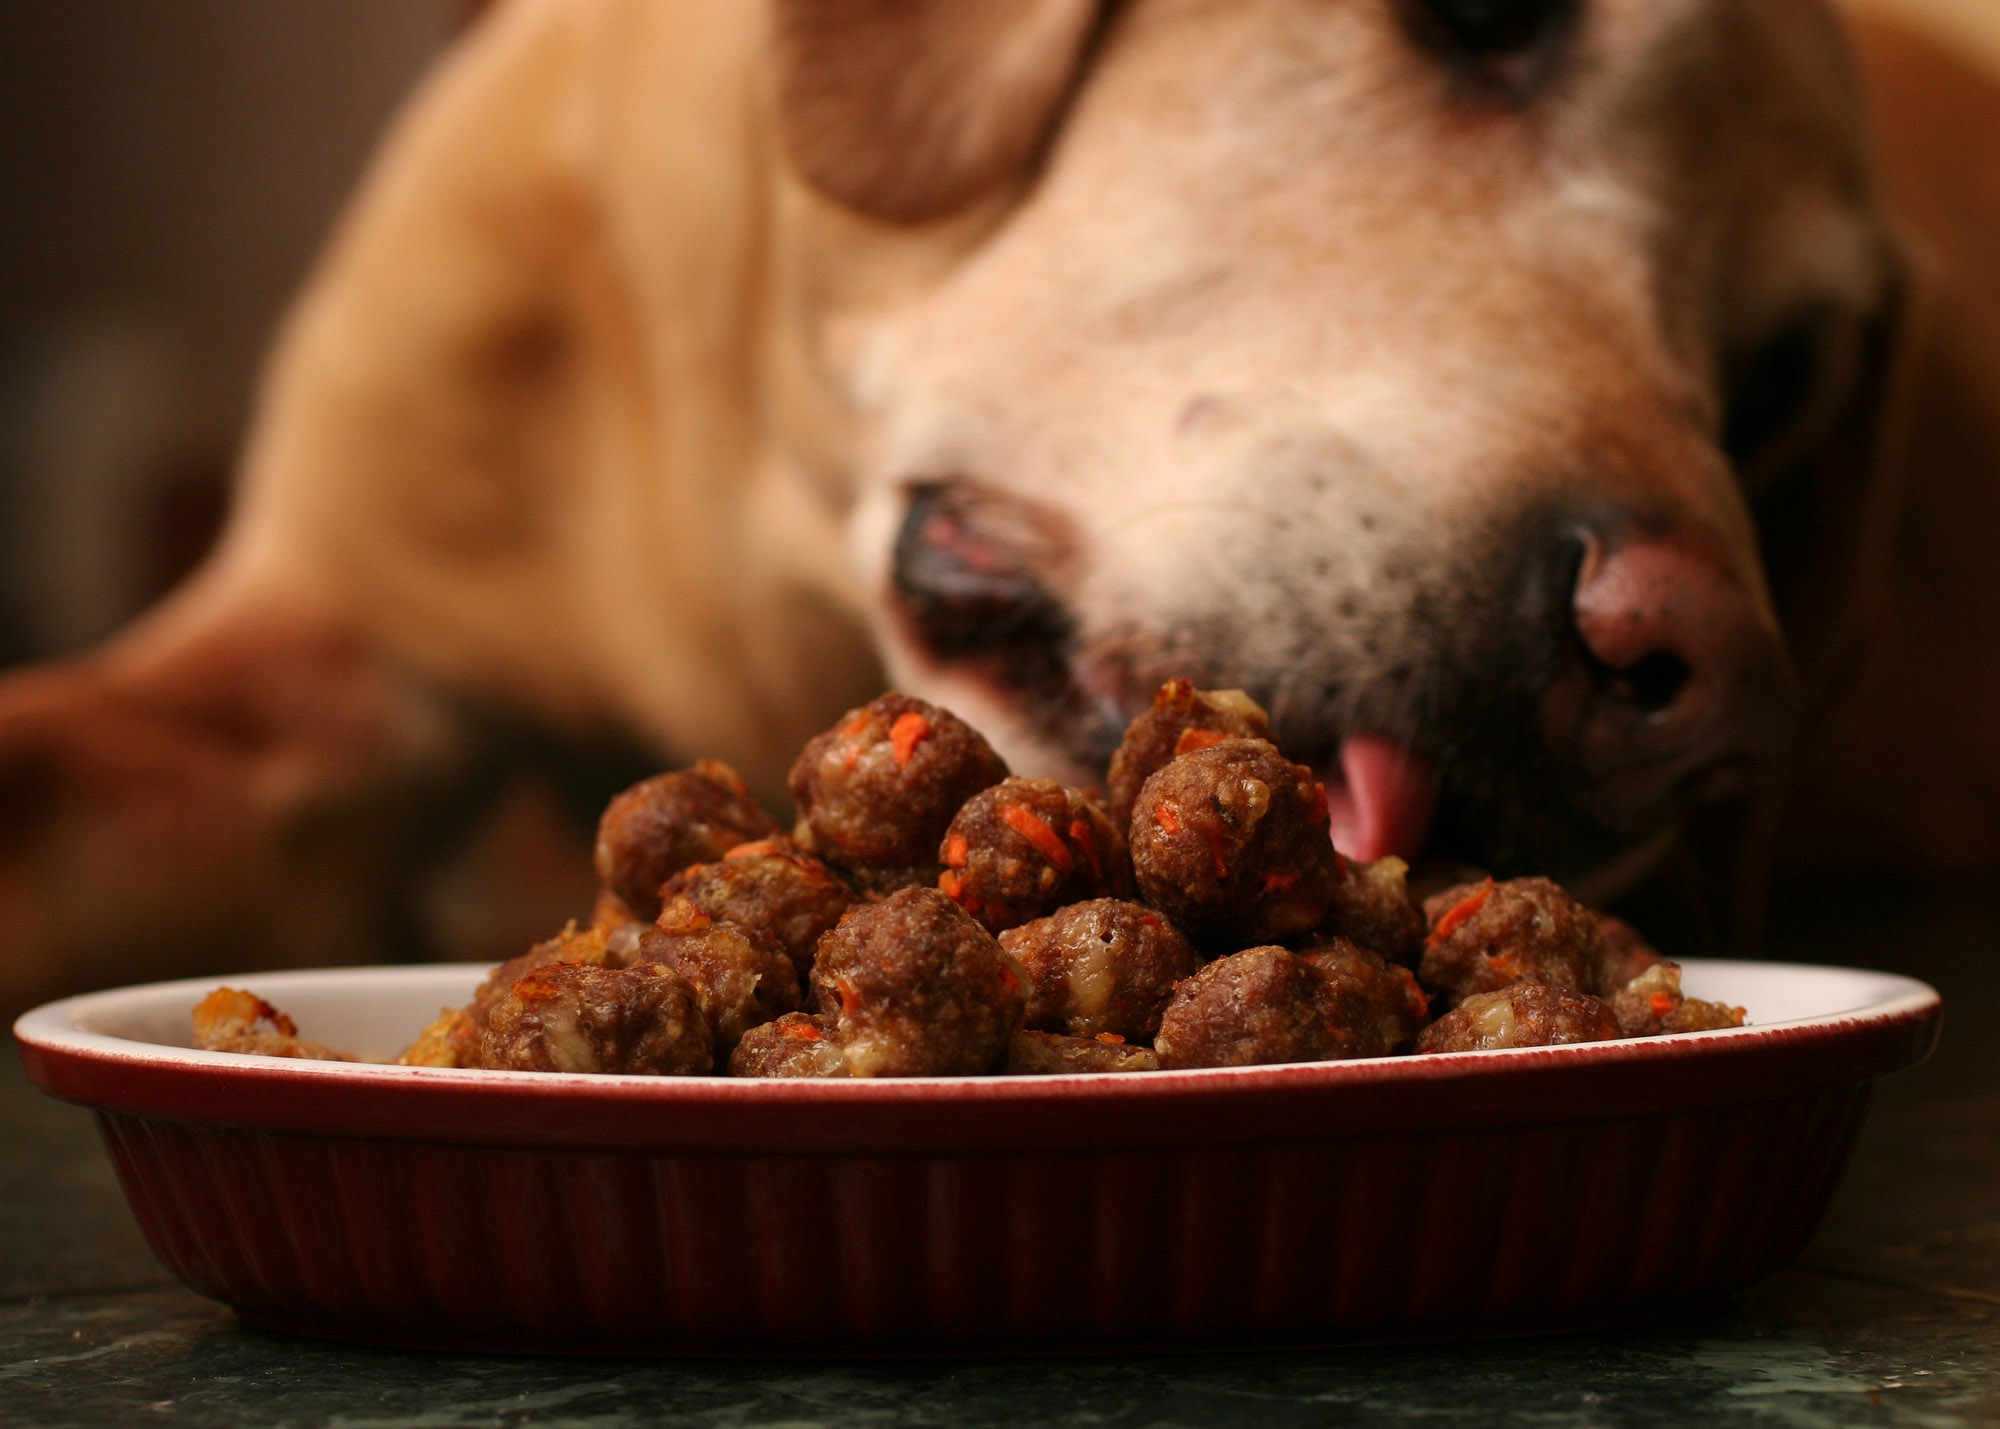 Some turn to DIY dog food after recent pet recalls